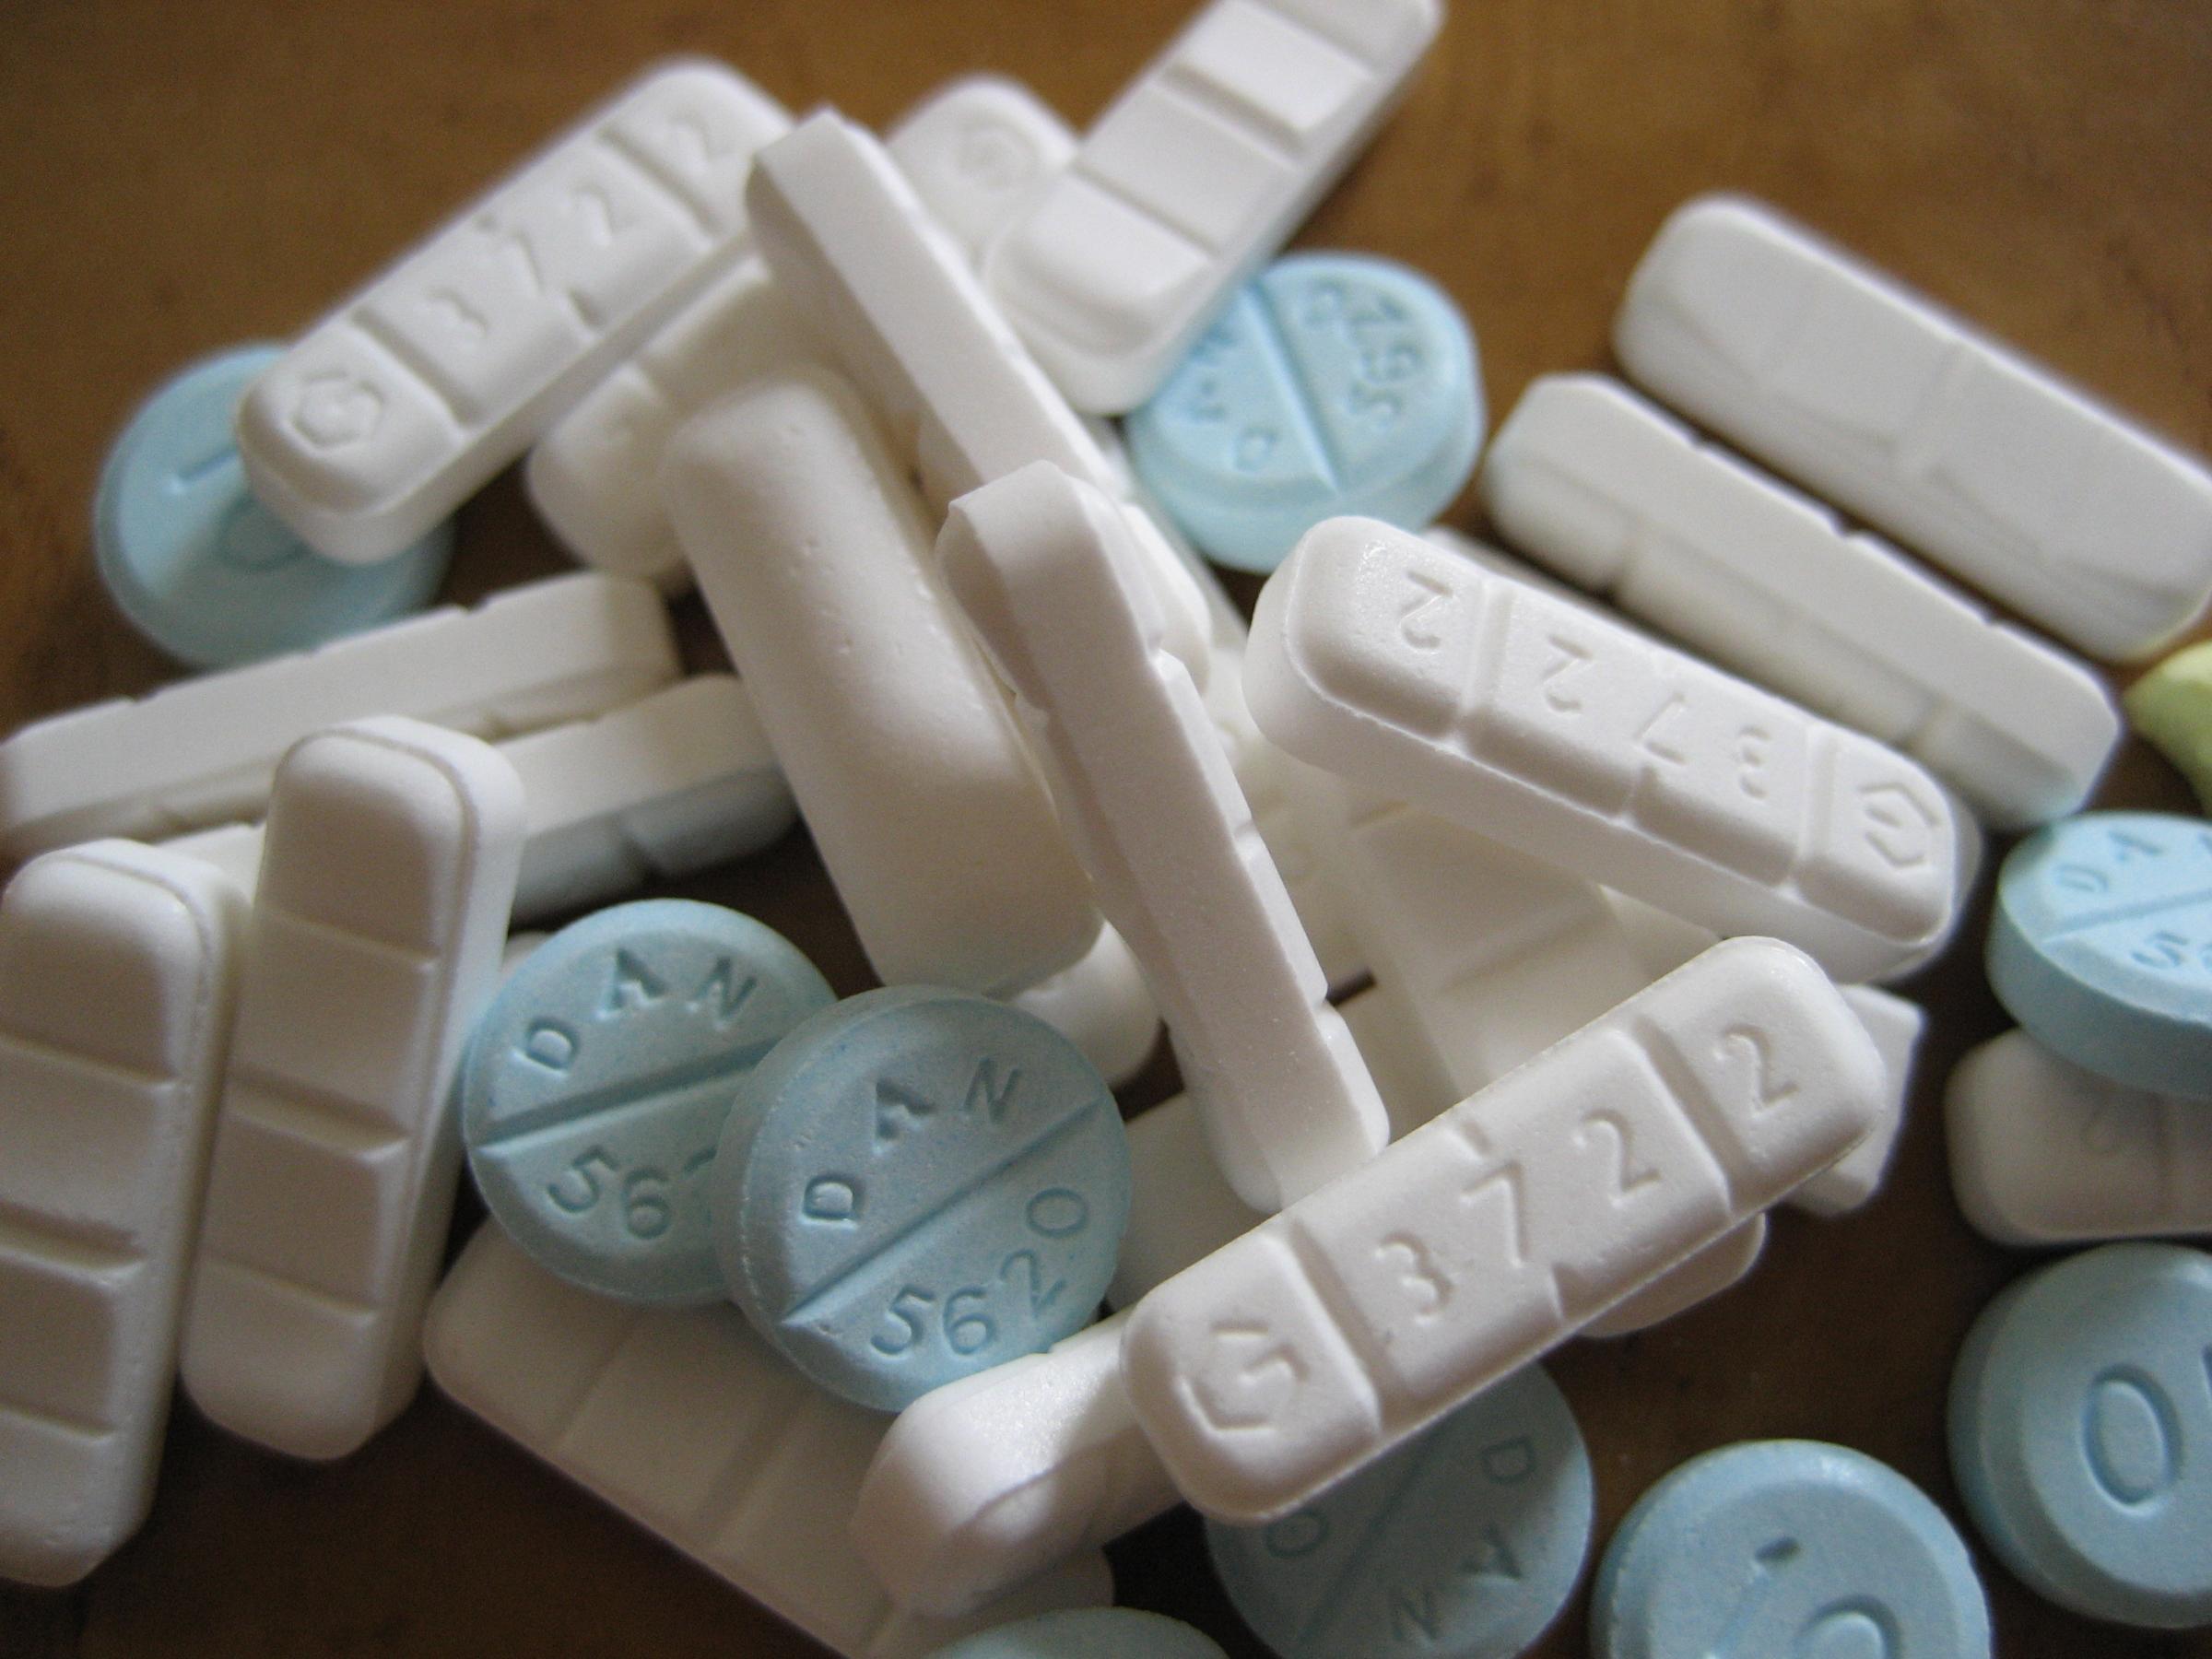 pictures of valium medication